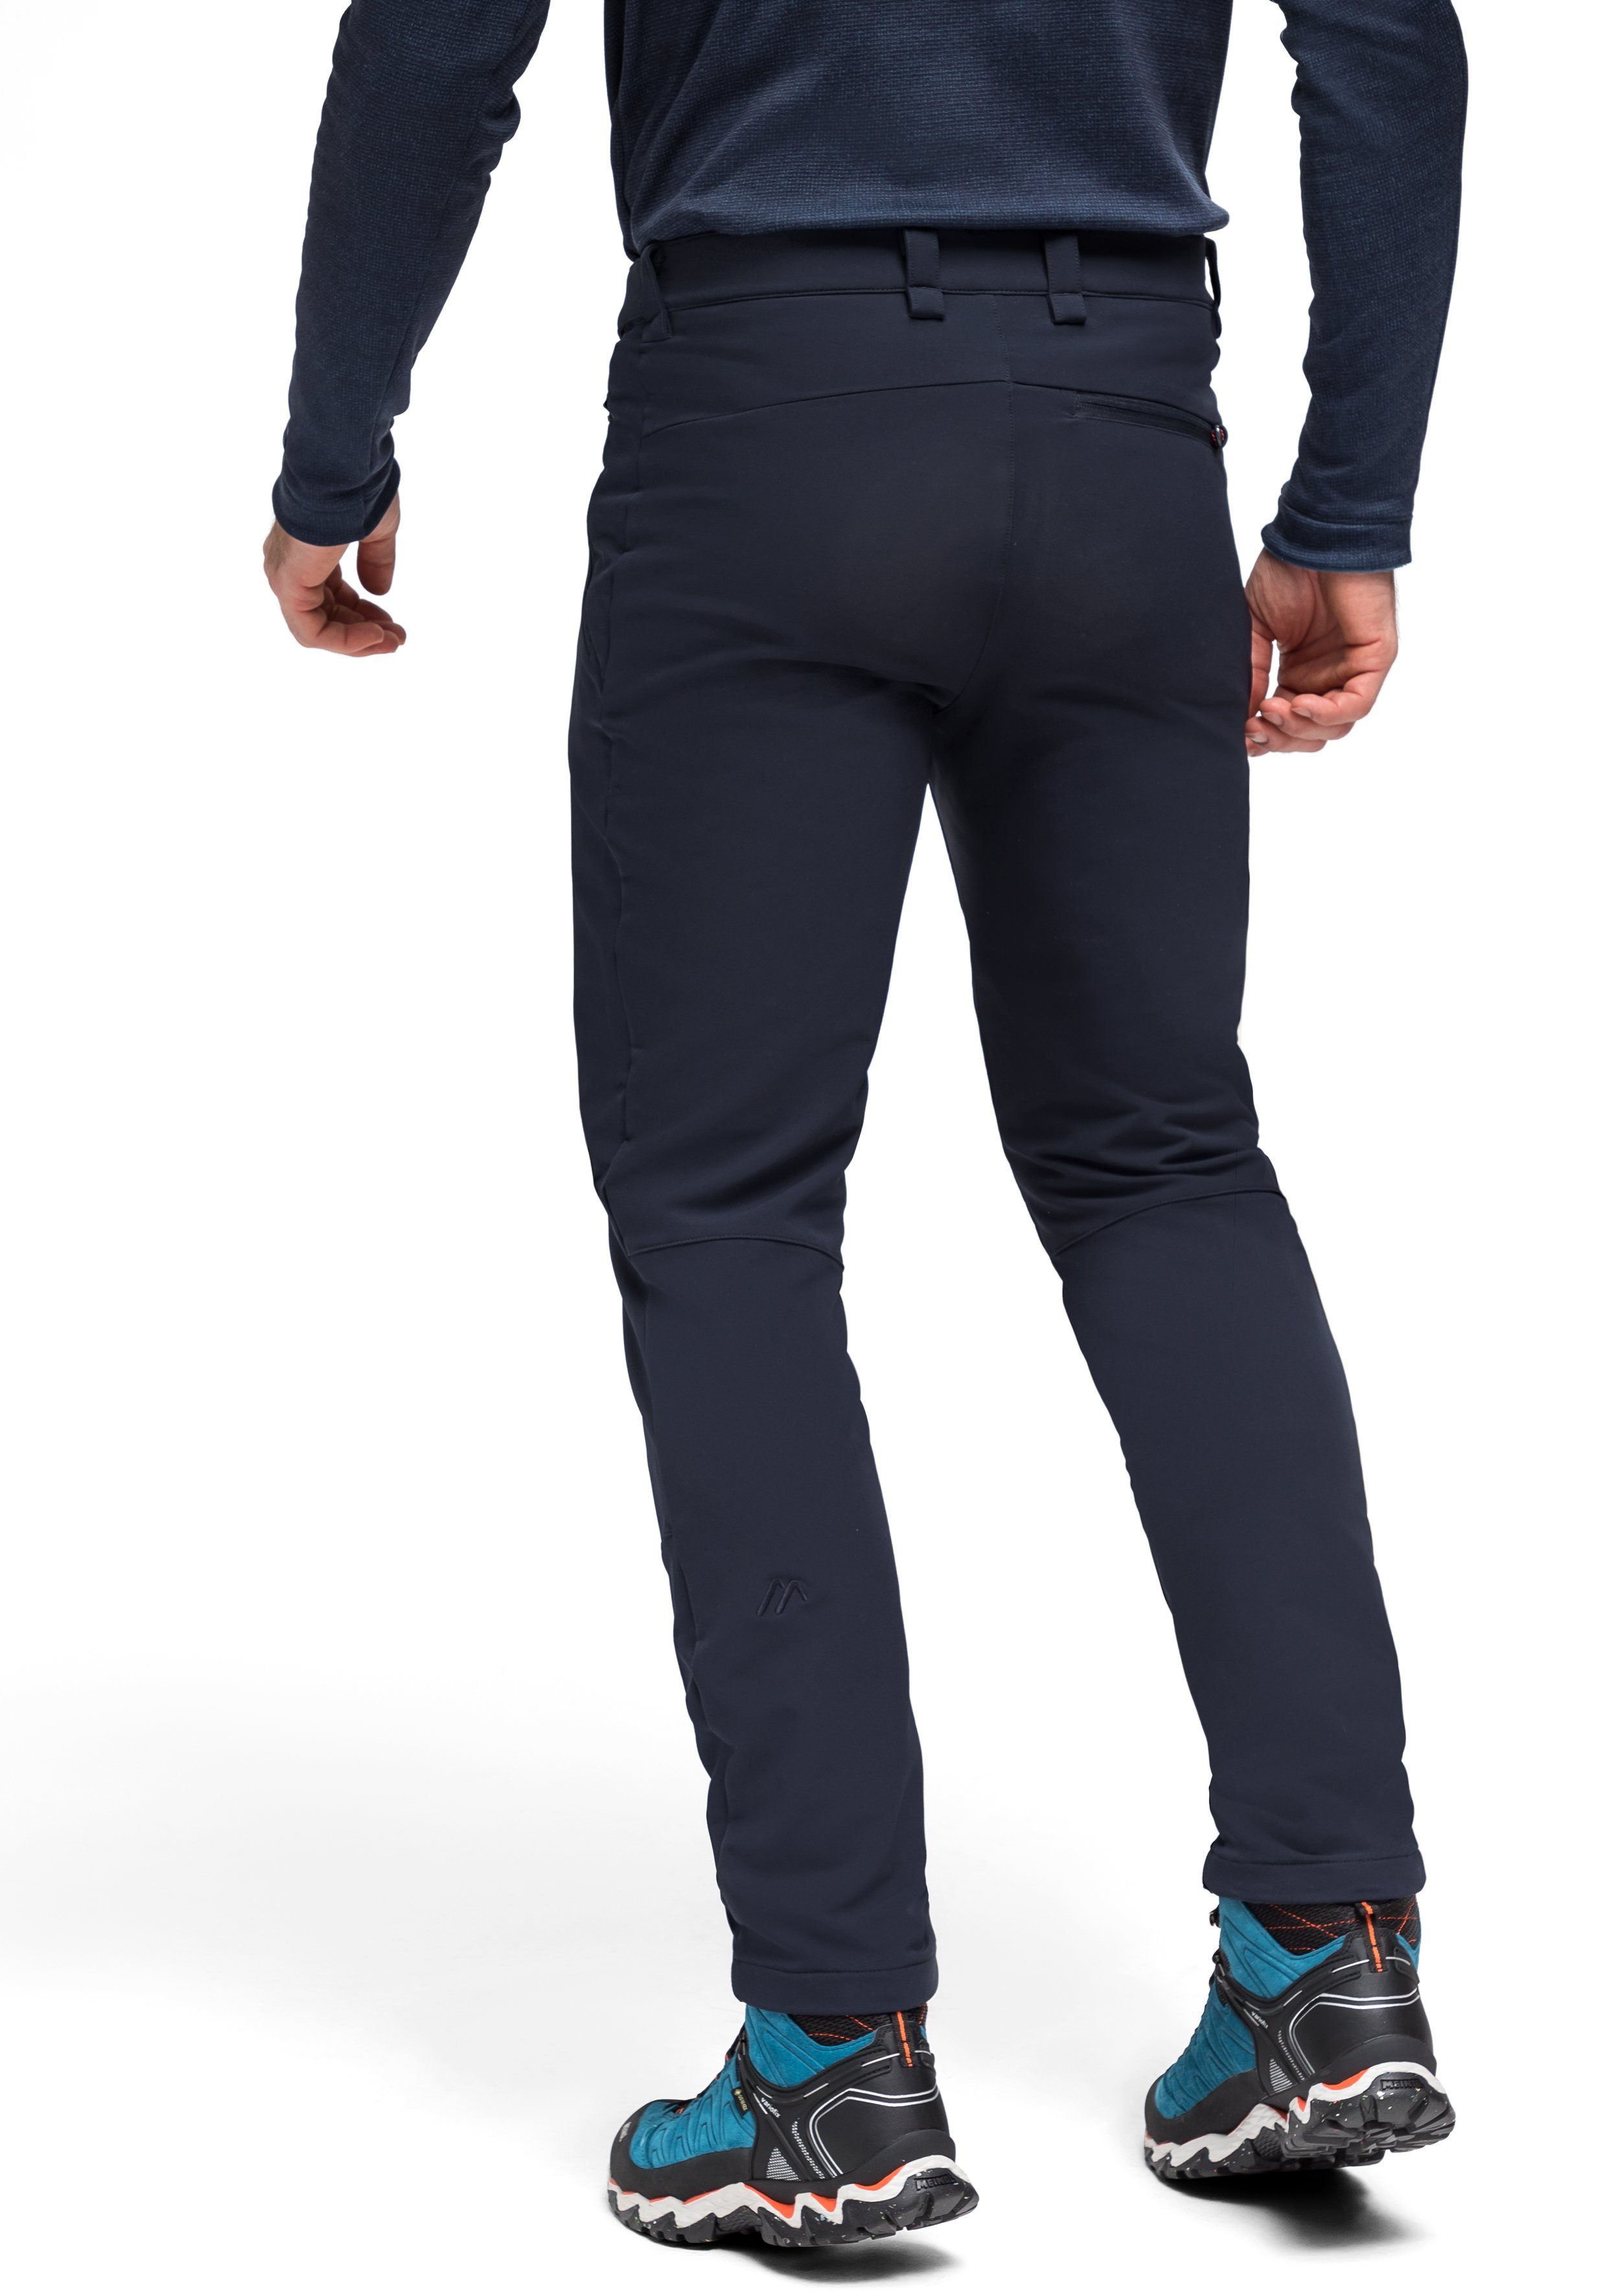 Look im Warme, Foidit M elastische Funktionshose Maier Sports Outdoorhose dunkelblau cleanen modernen